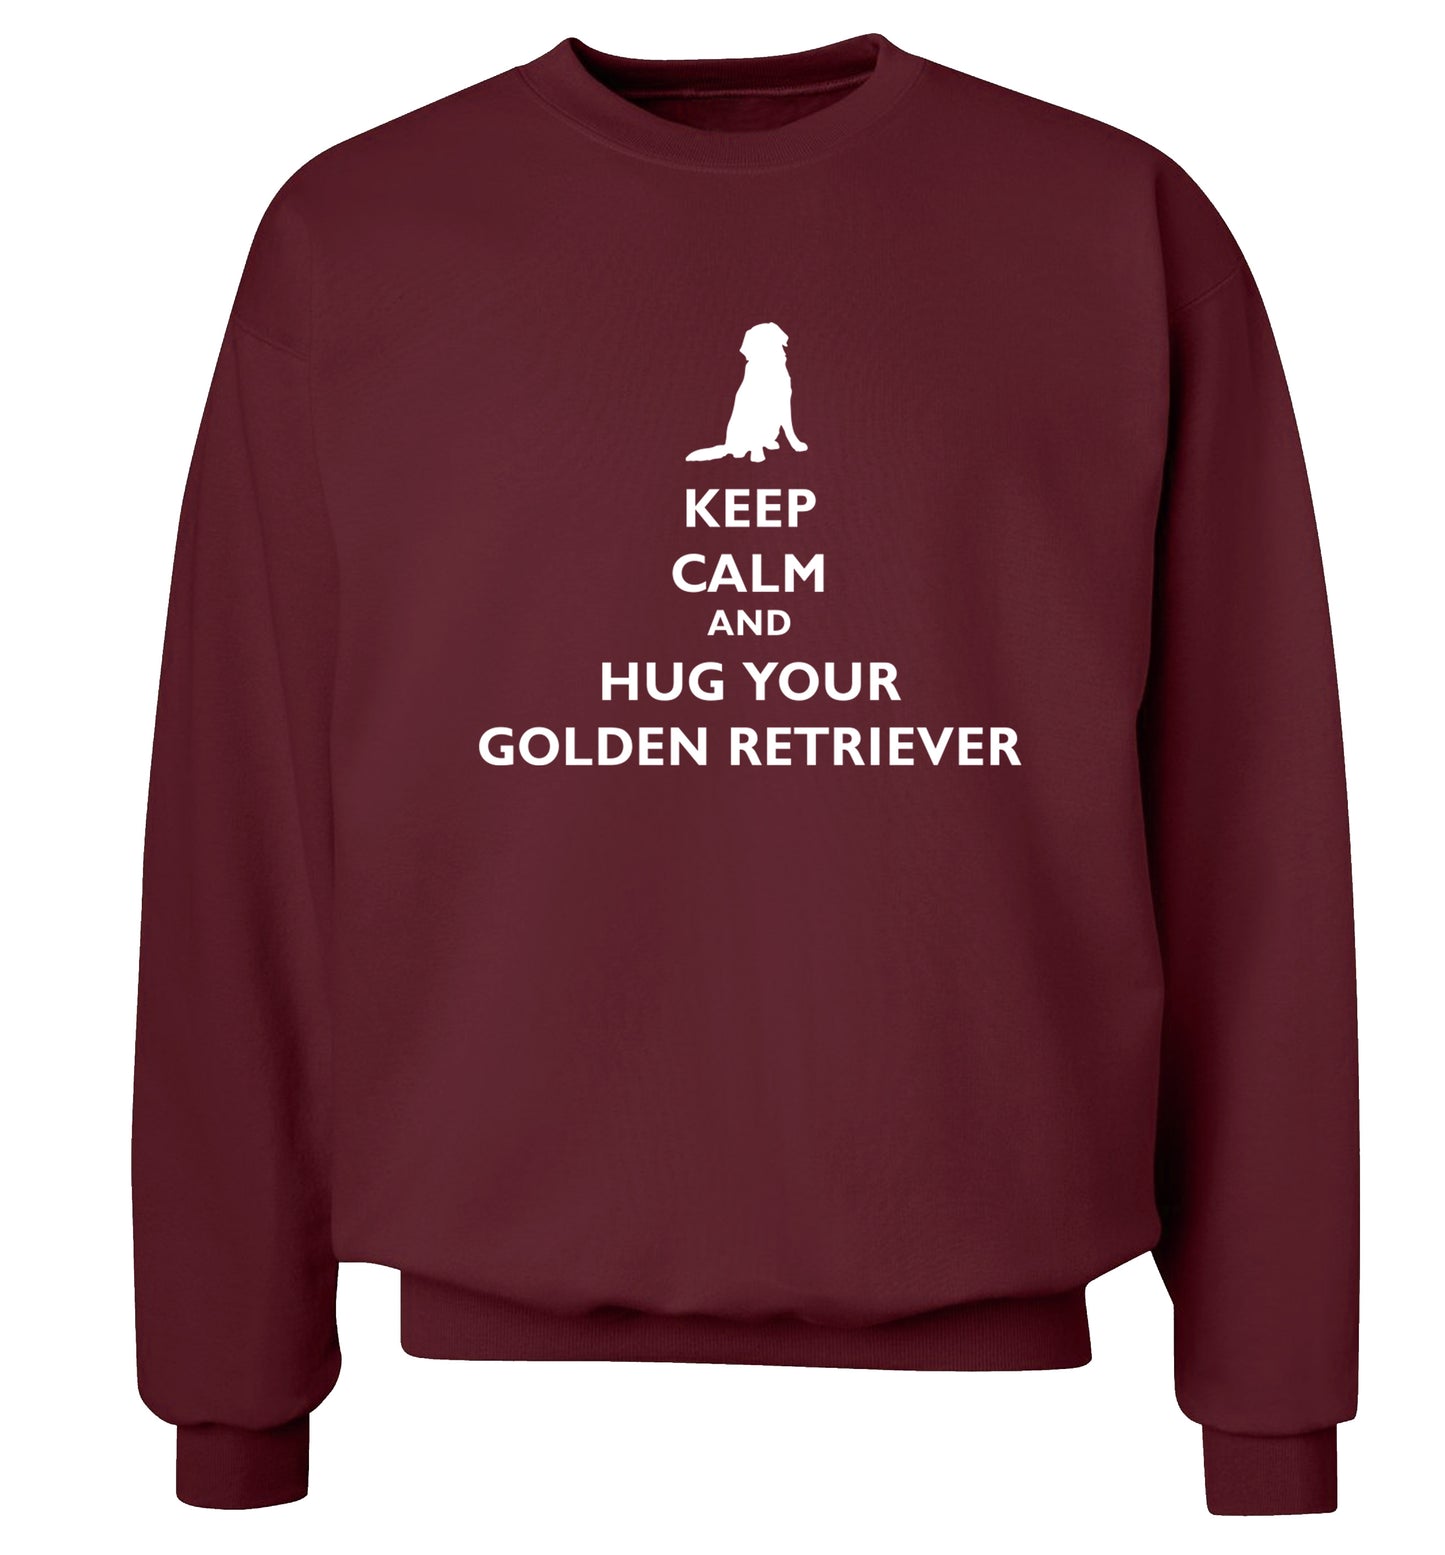 Keep calm and hug your golden retriever Adult's unisex maroon Sweater 2XL